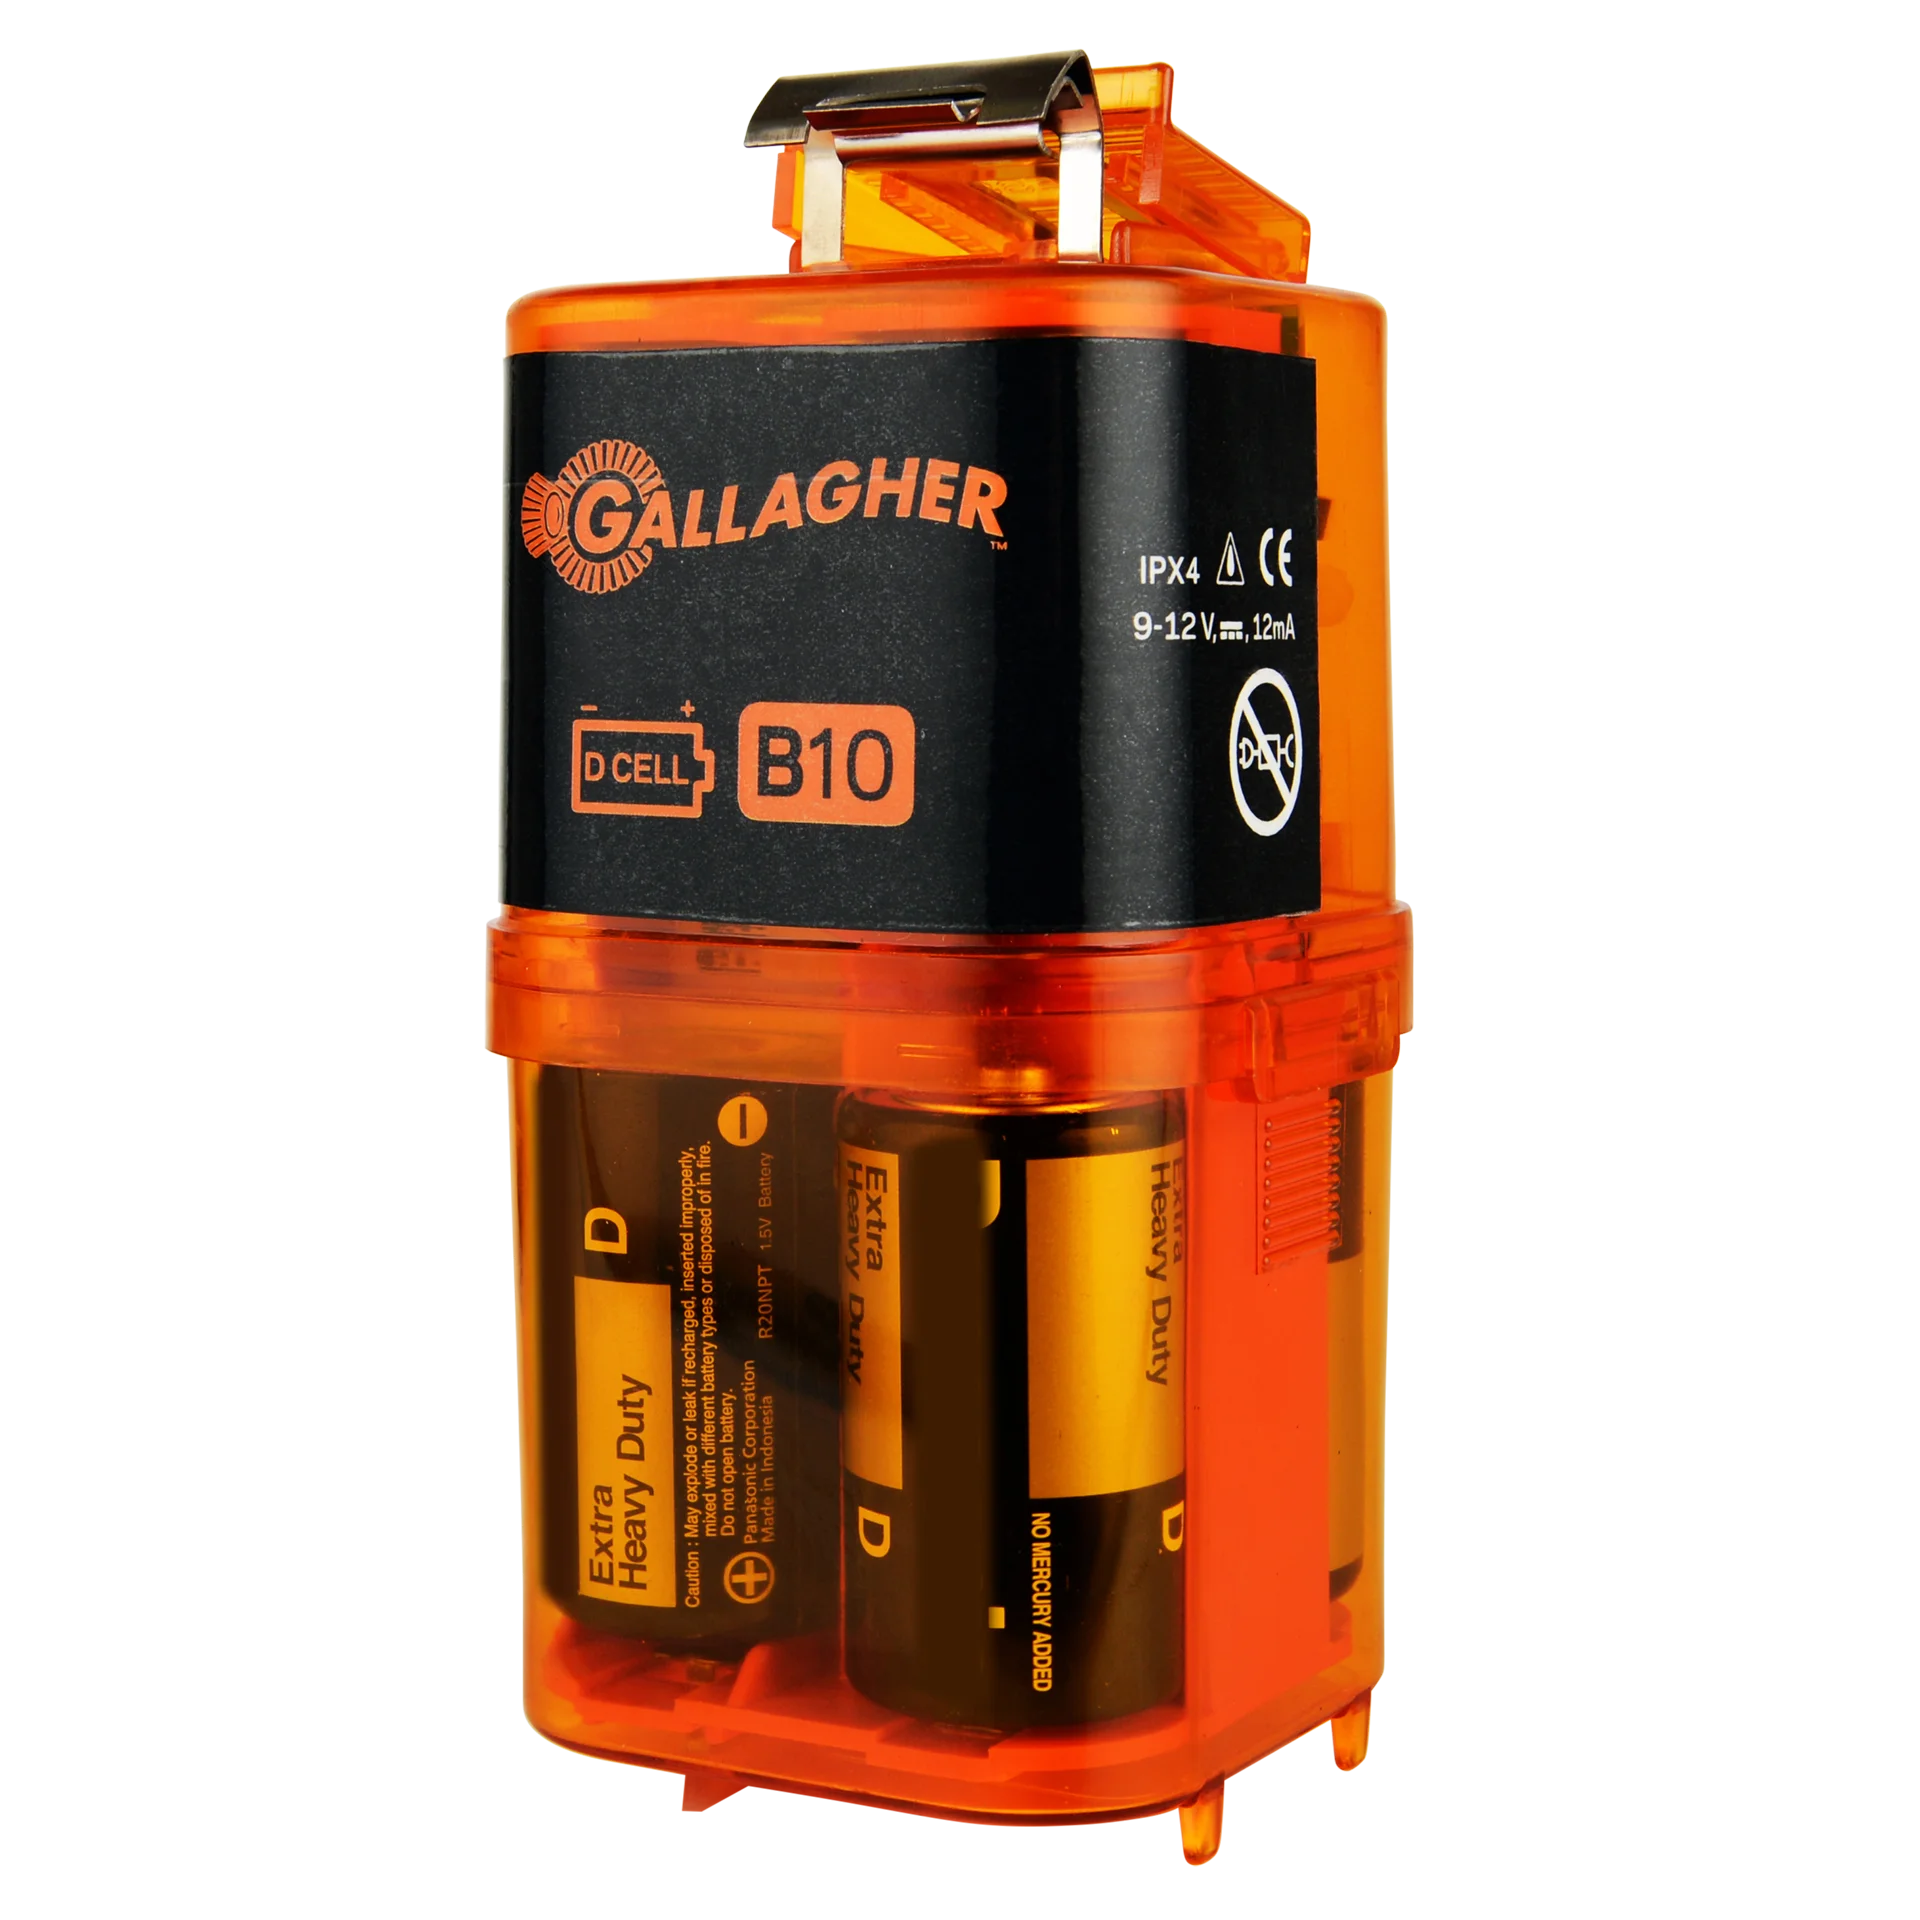 Gallagher B10 battery fence energiser